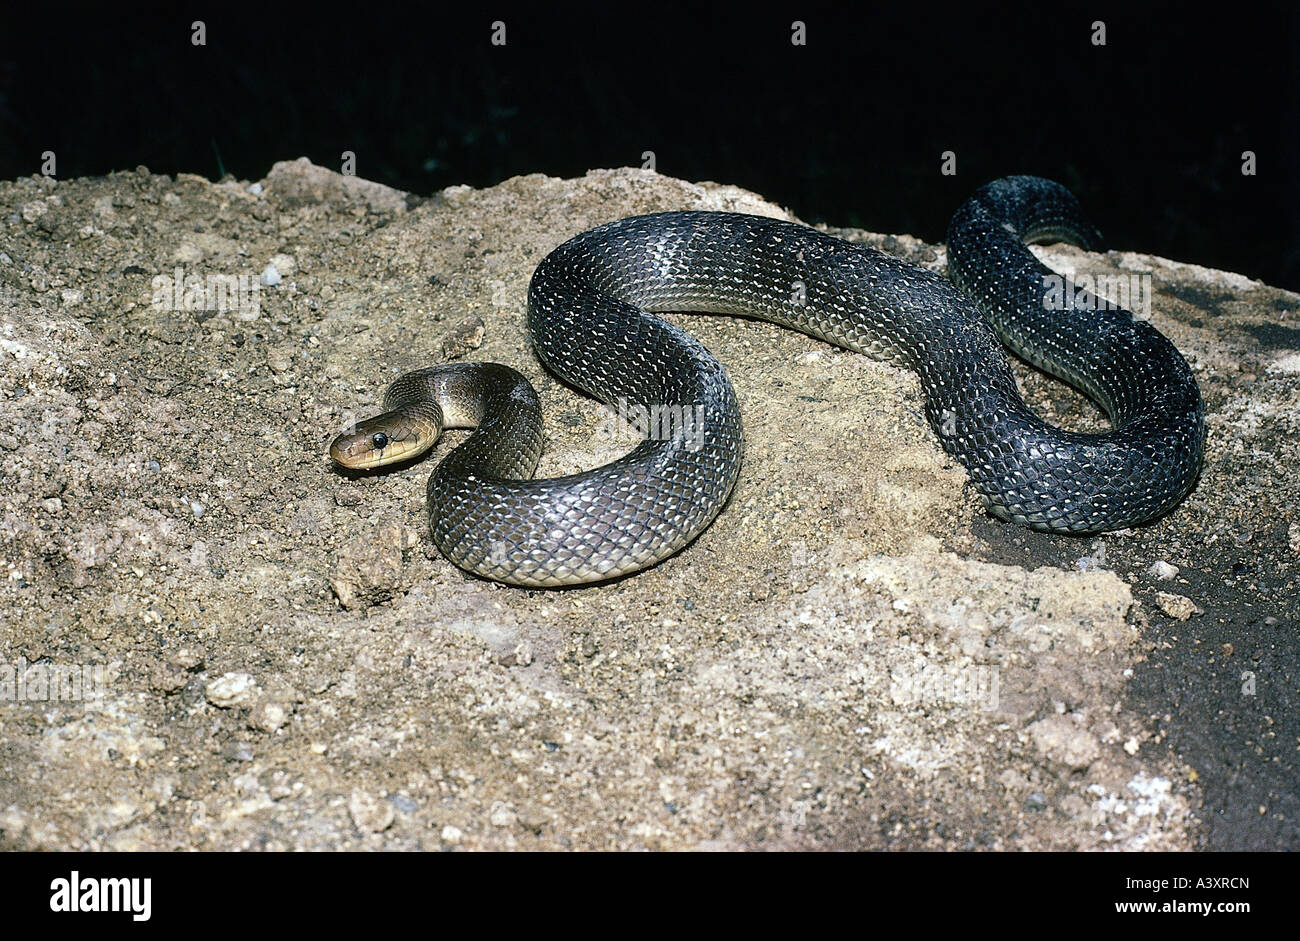 zoology / animals, reptiles, snakes, Aesculapian Snake, (Elaphe longissima), on tree stump, distribution: Southern Europe, Cauca Stock Photo